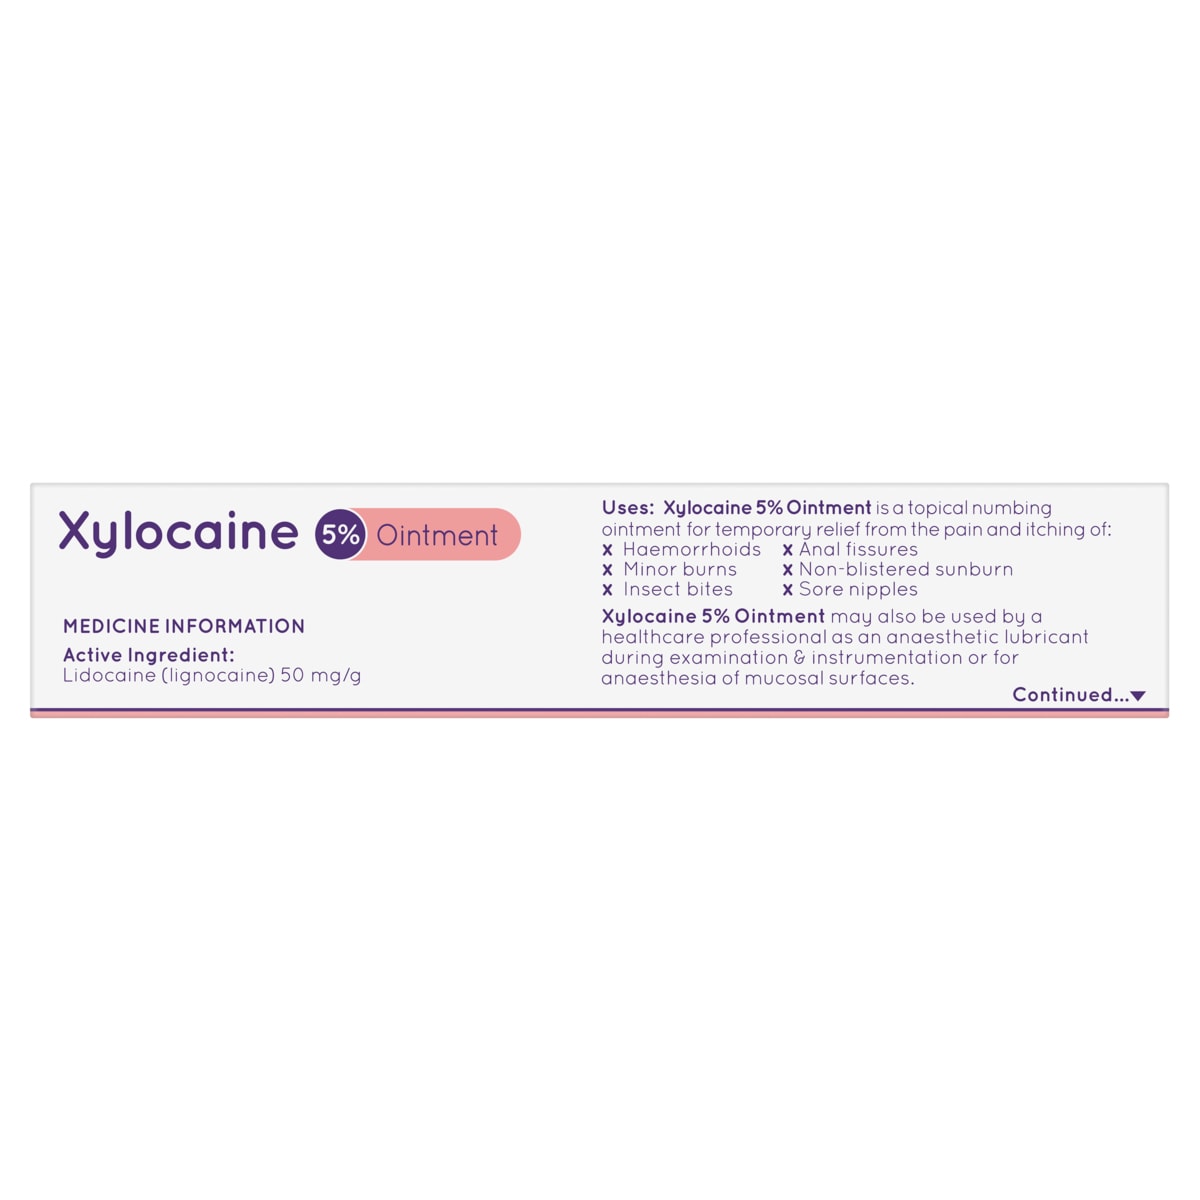 Xylocaine 5% Ointment 15g